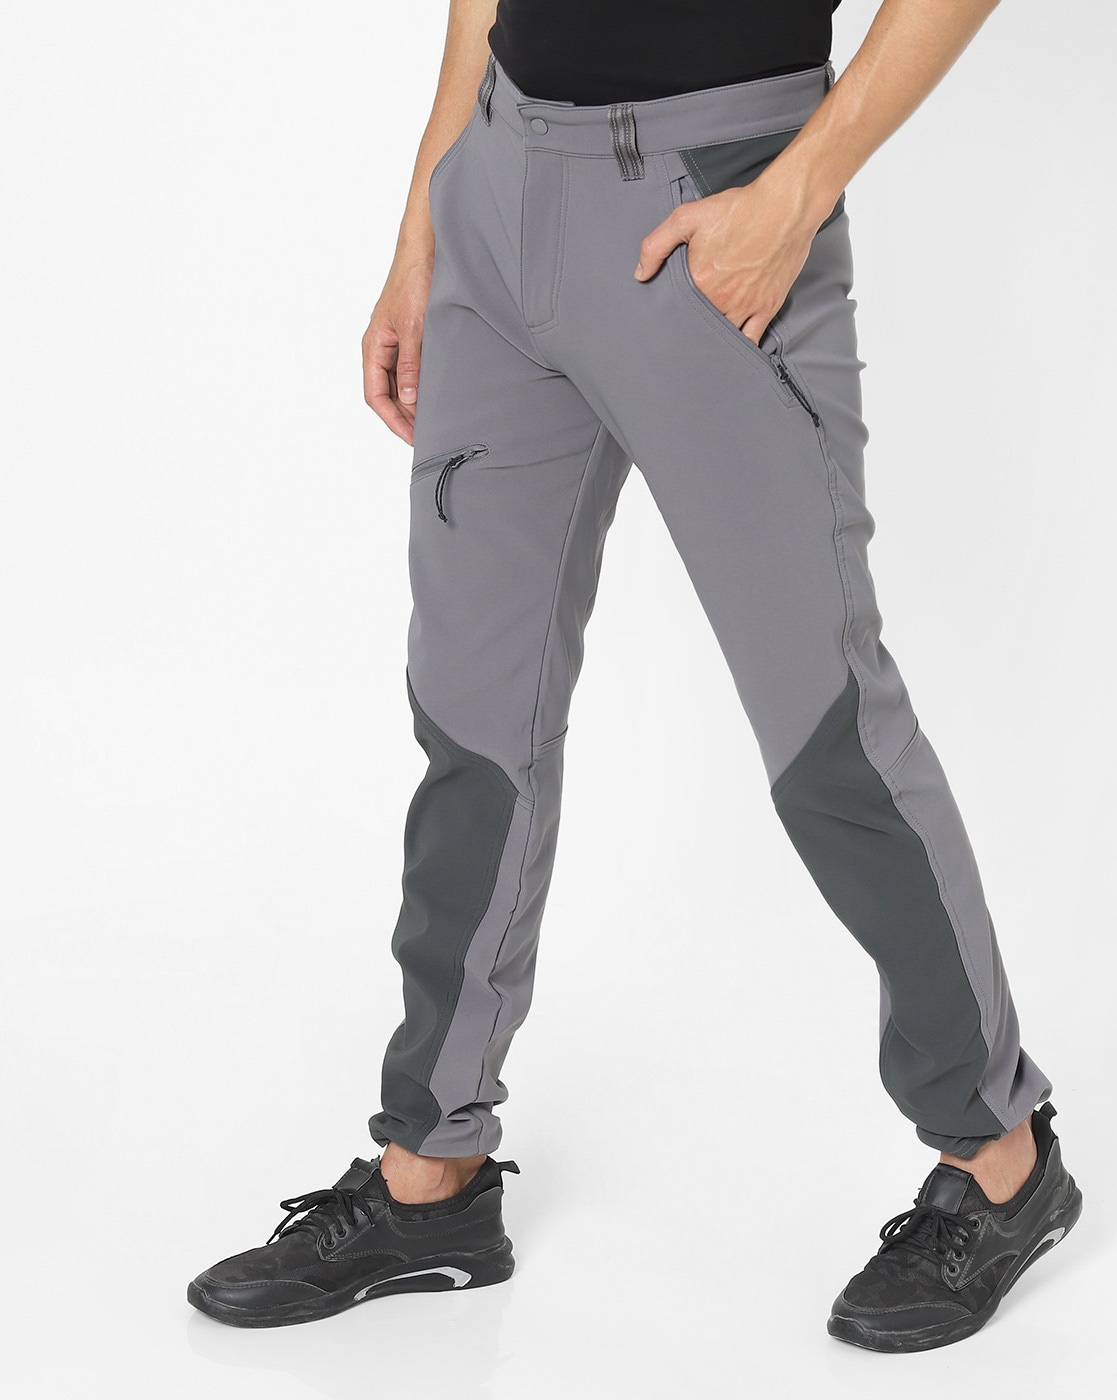 Men's Wintertrainer™ Sweatpants | Columbia Sportswear